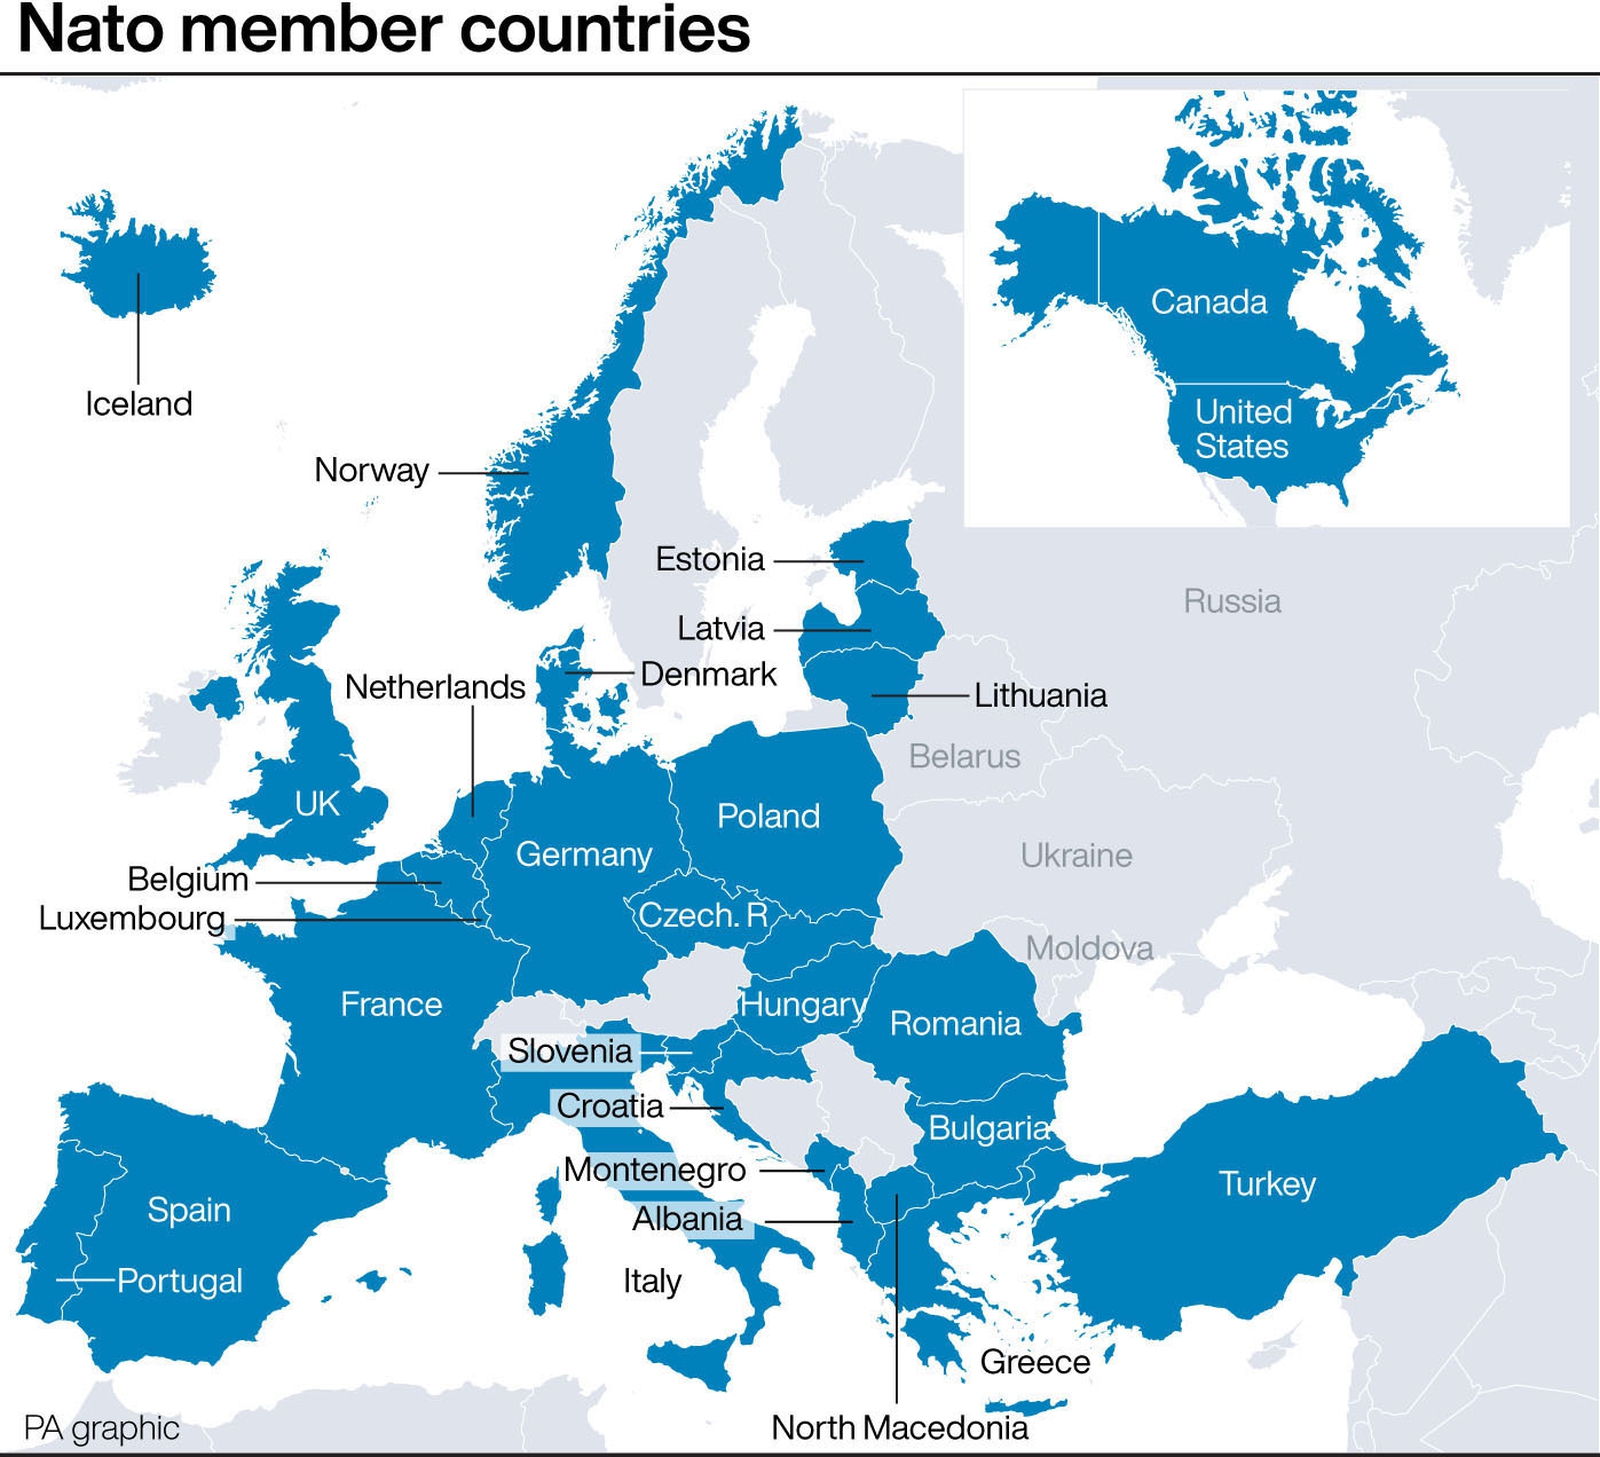 Image - NATO member countries